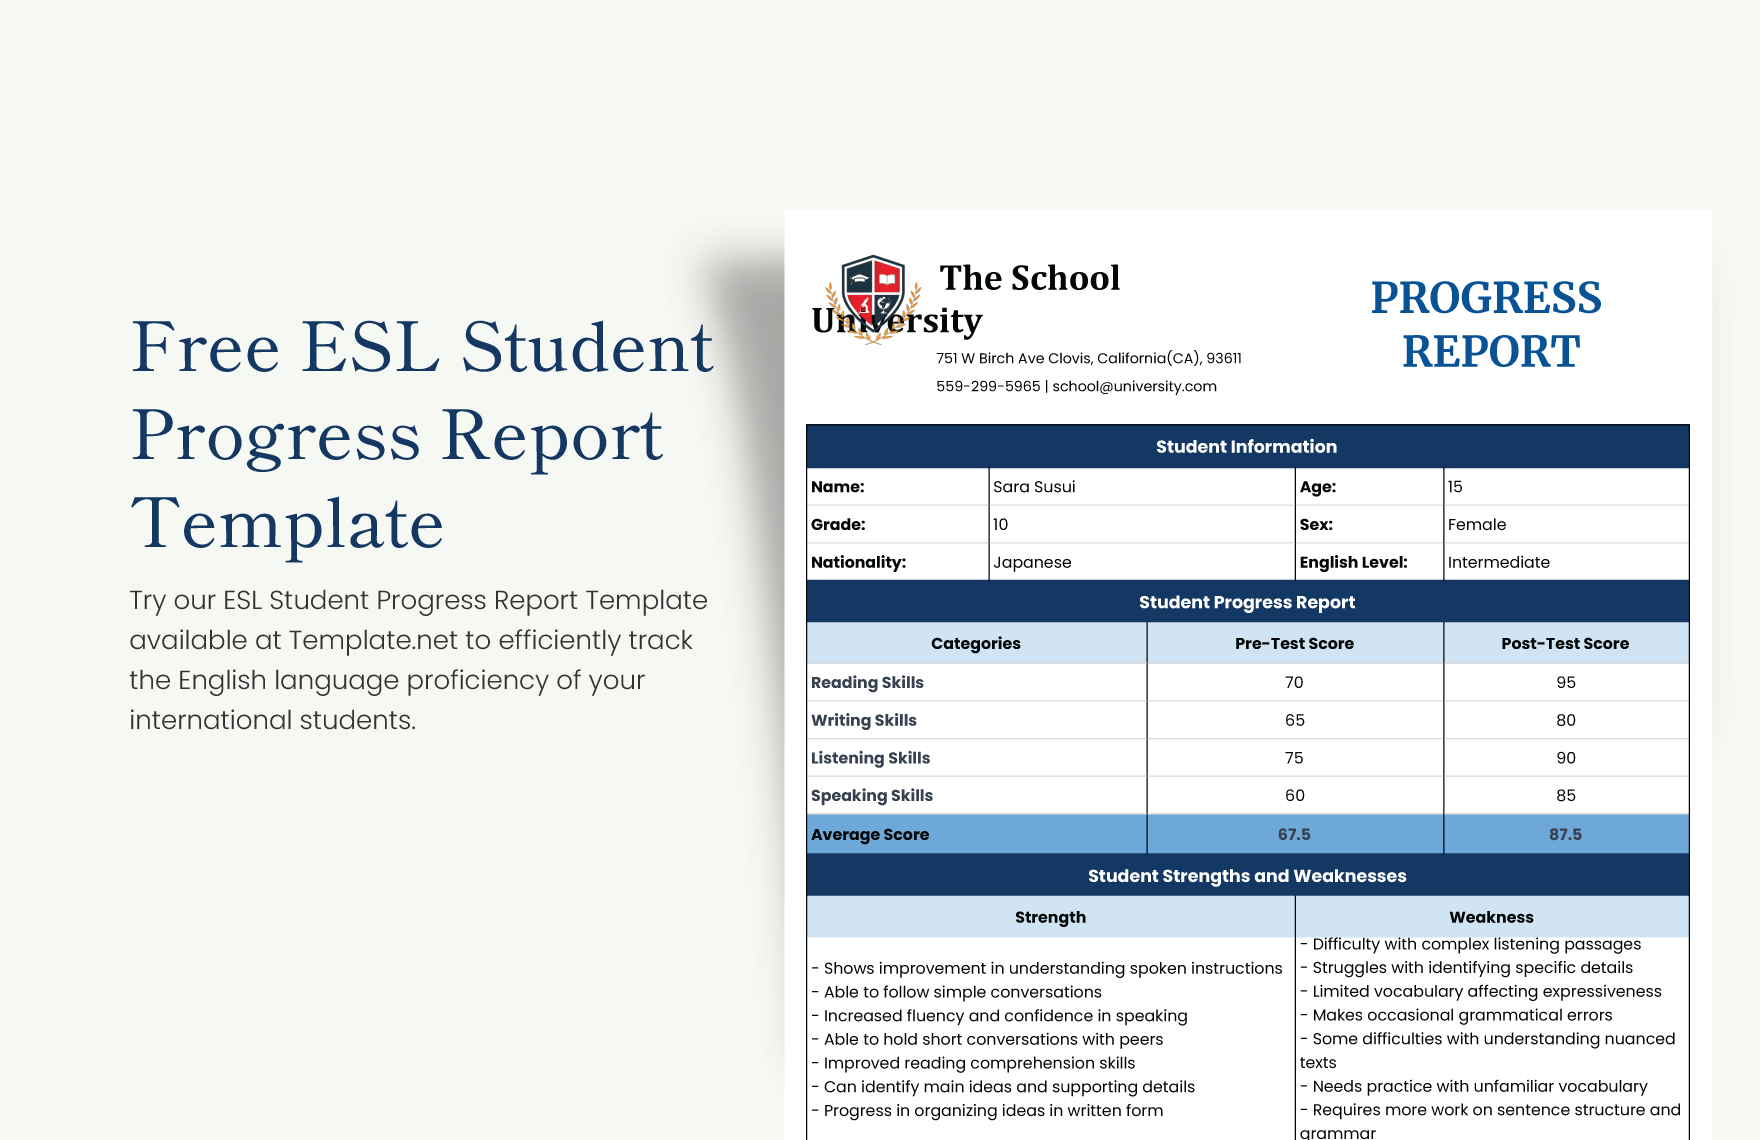 ESL Student Progress Report Template